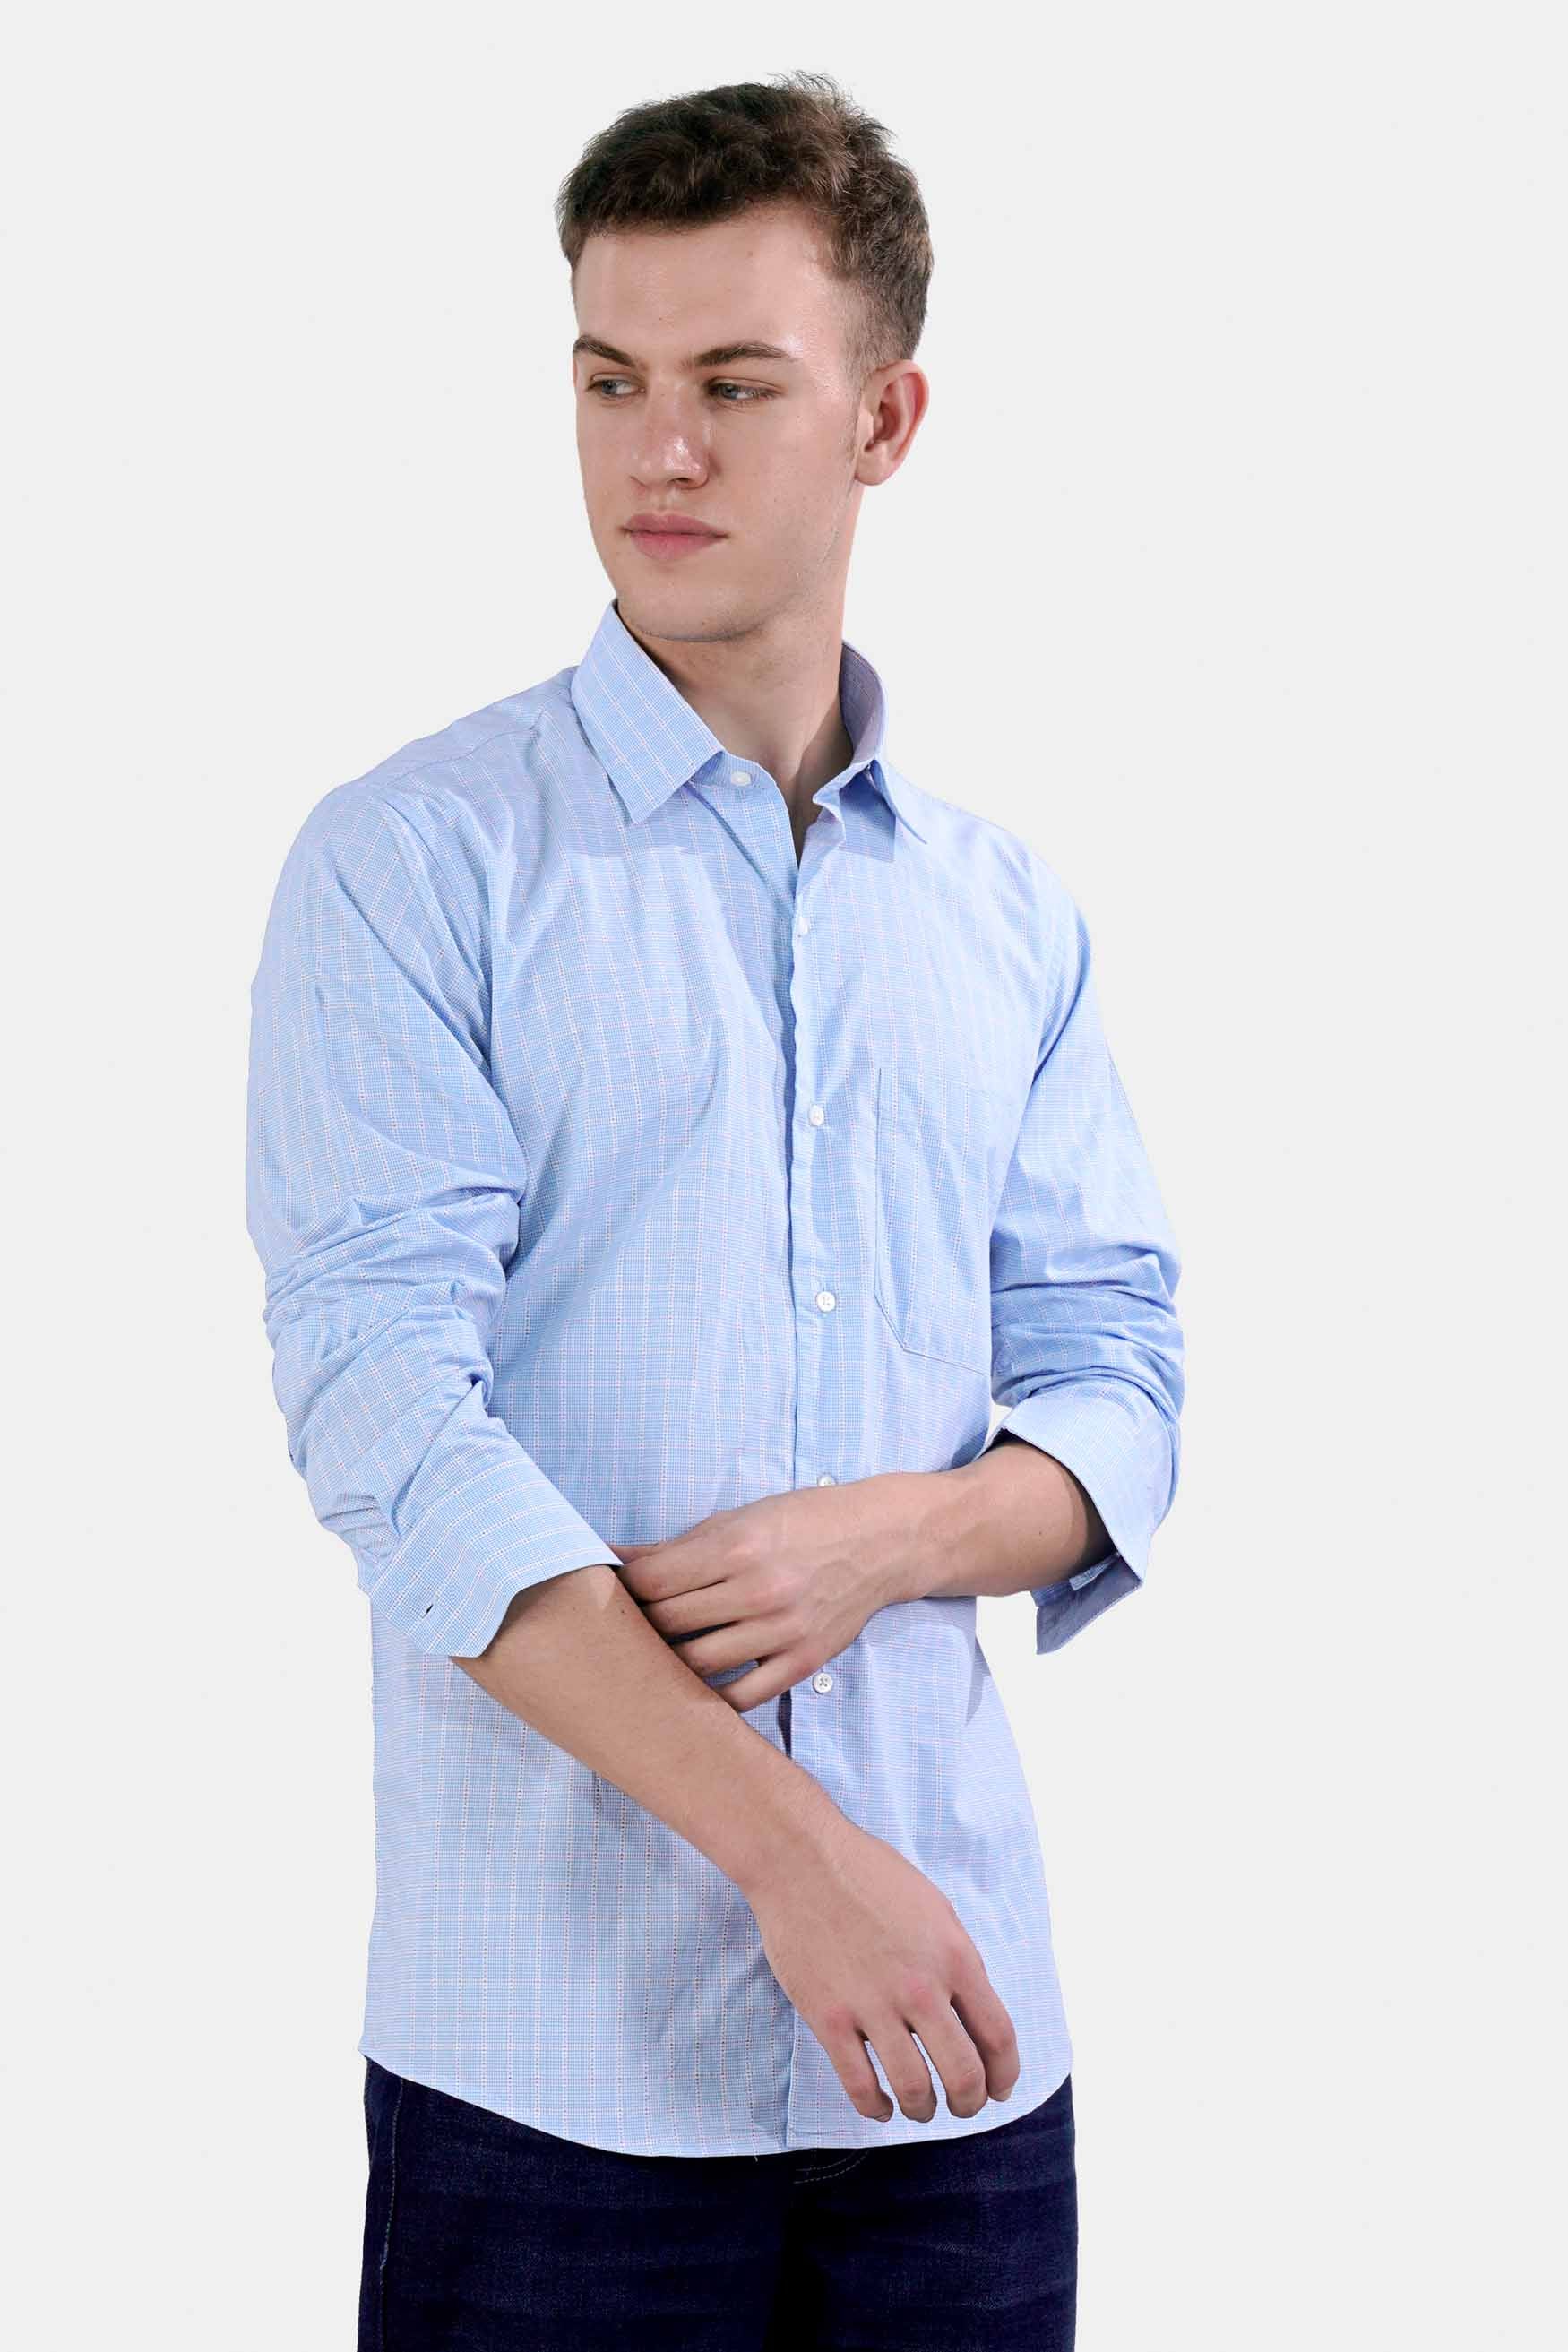 Carolina Blue Checkered Dobby Textured Premium Giza Cotton Shirt